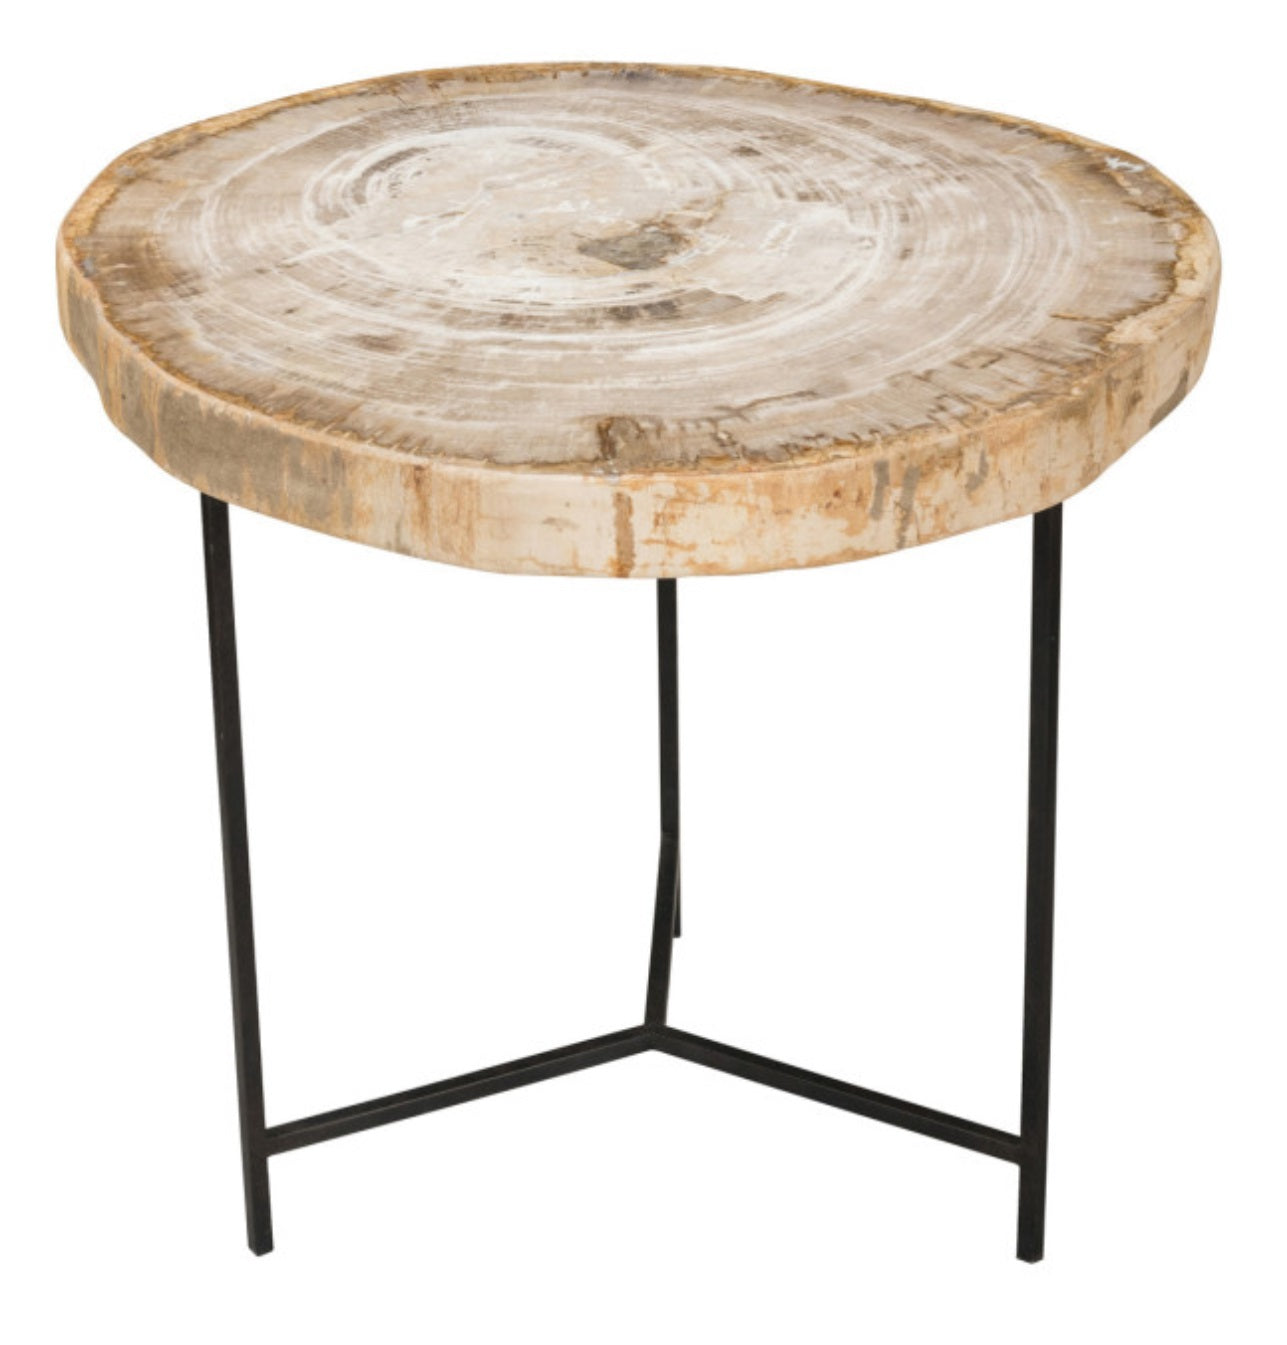 Riley Petrified Wood Table, Large